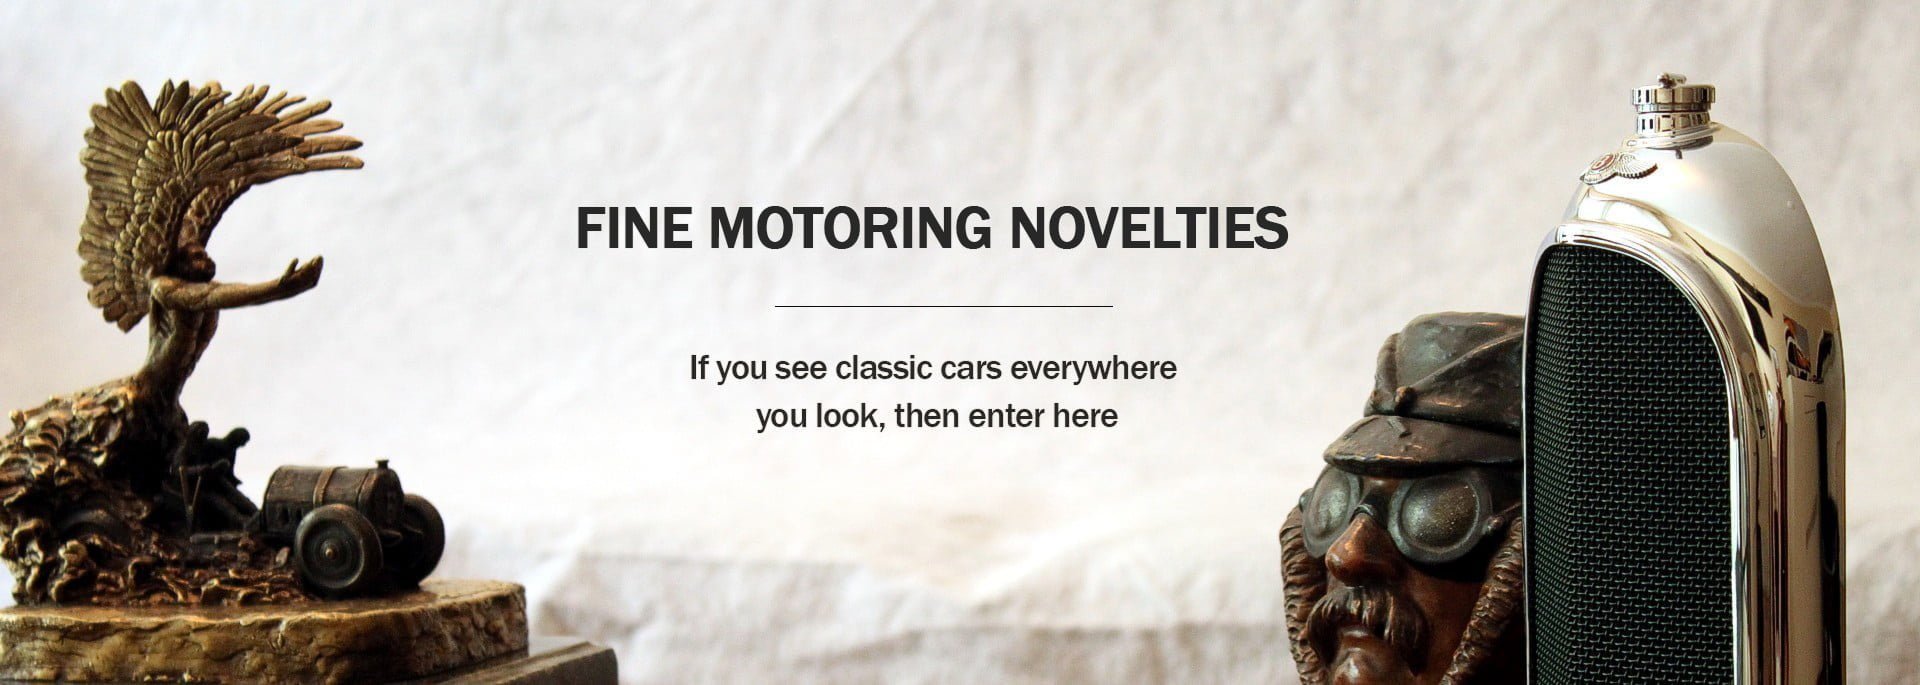 Fine Motoring Novelties